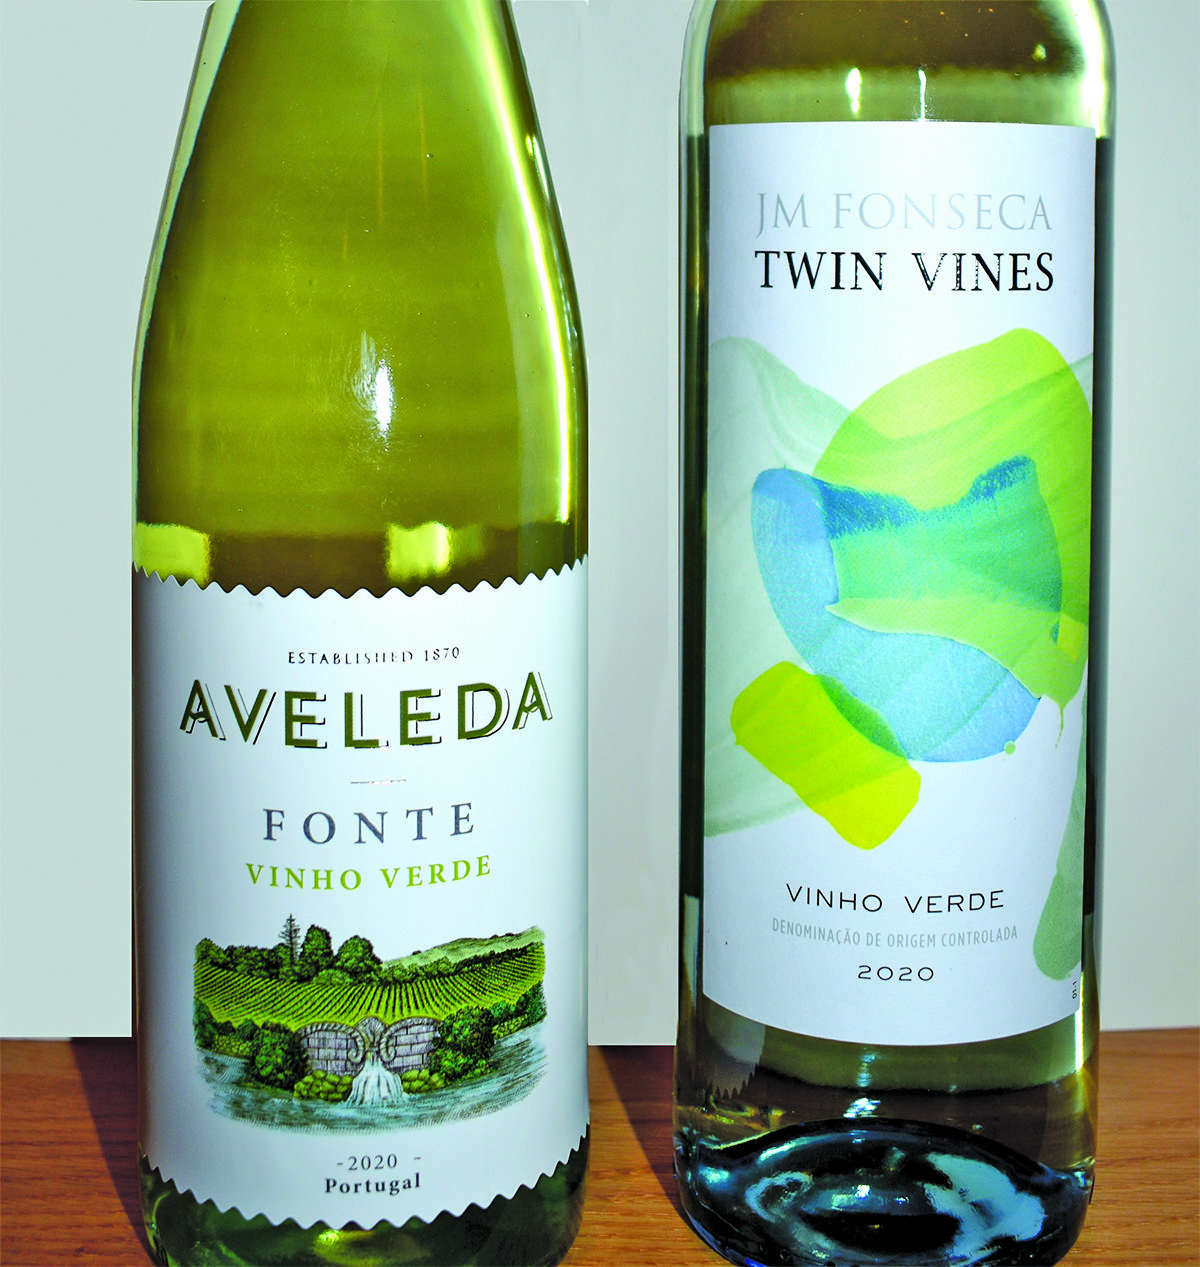 Vinho Verde, or “green wine,” is an interesting wine from northwestern Portugal.